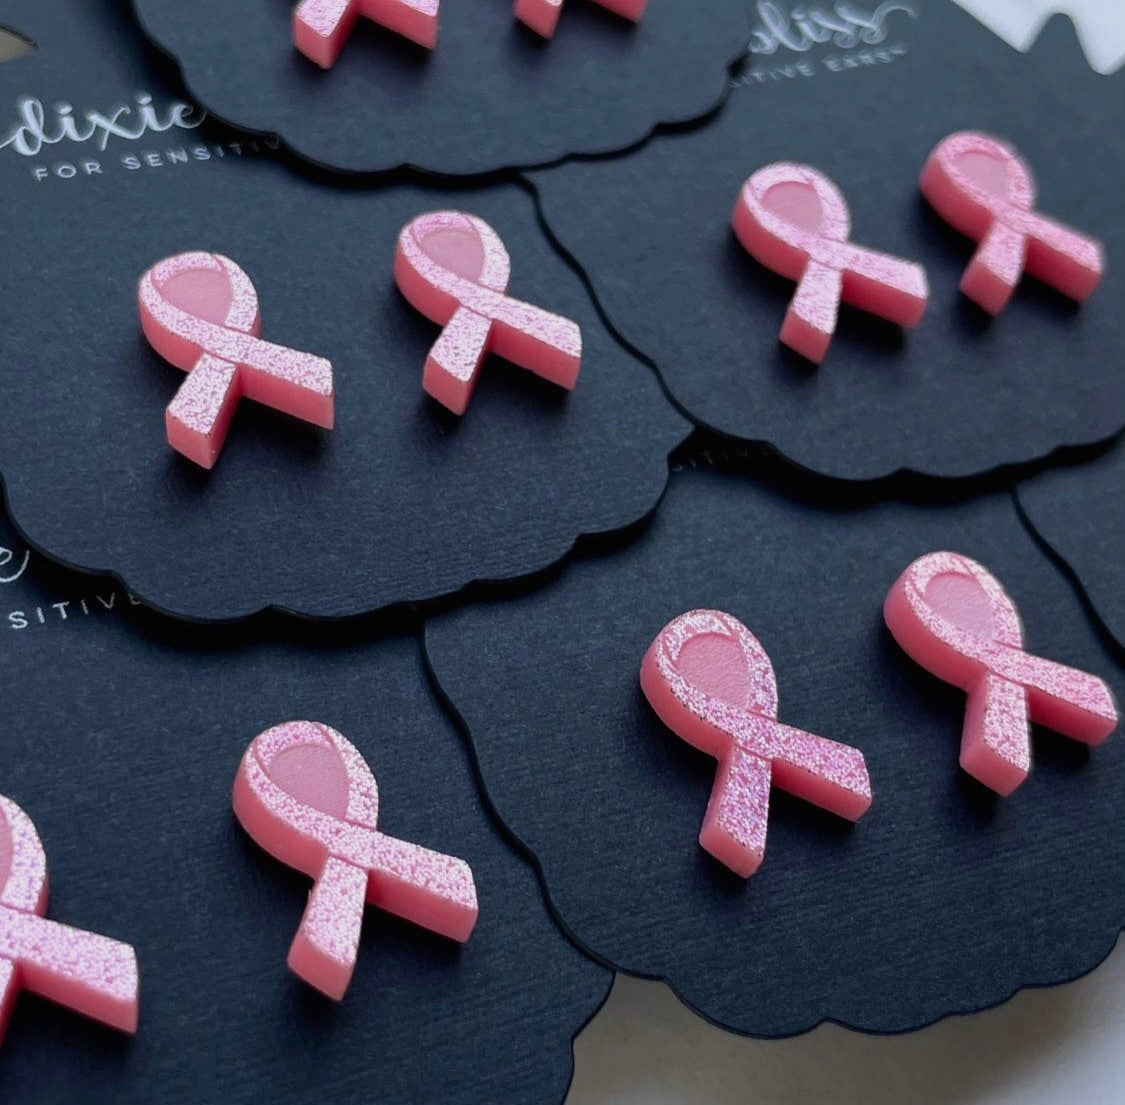 Breast Cancer Awareness Studs